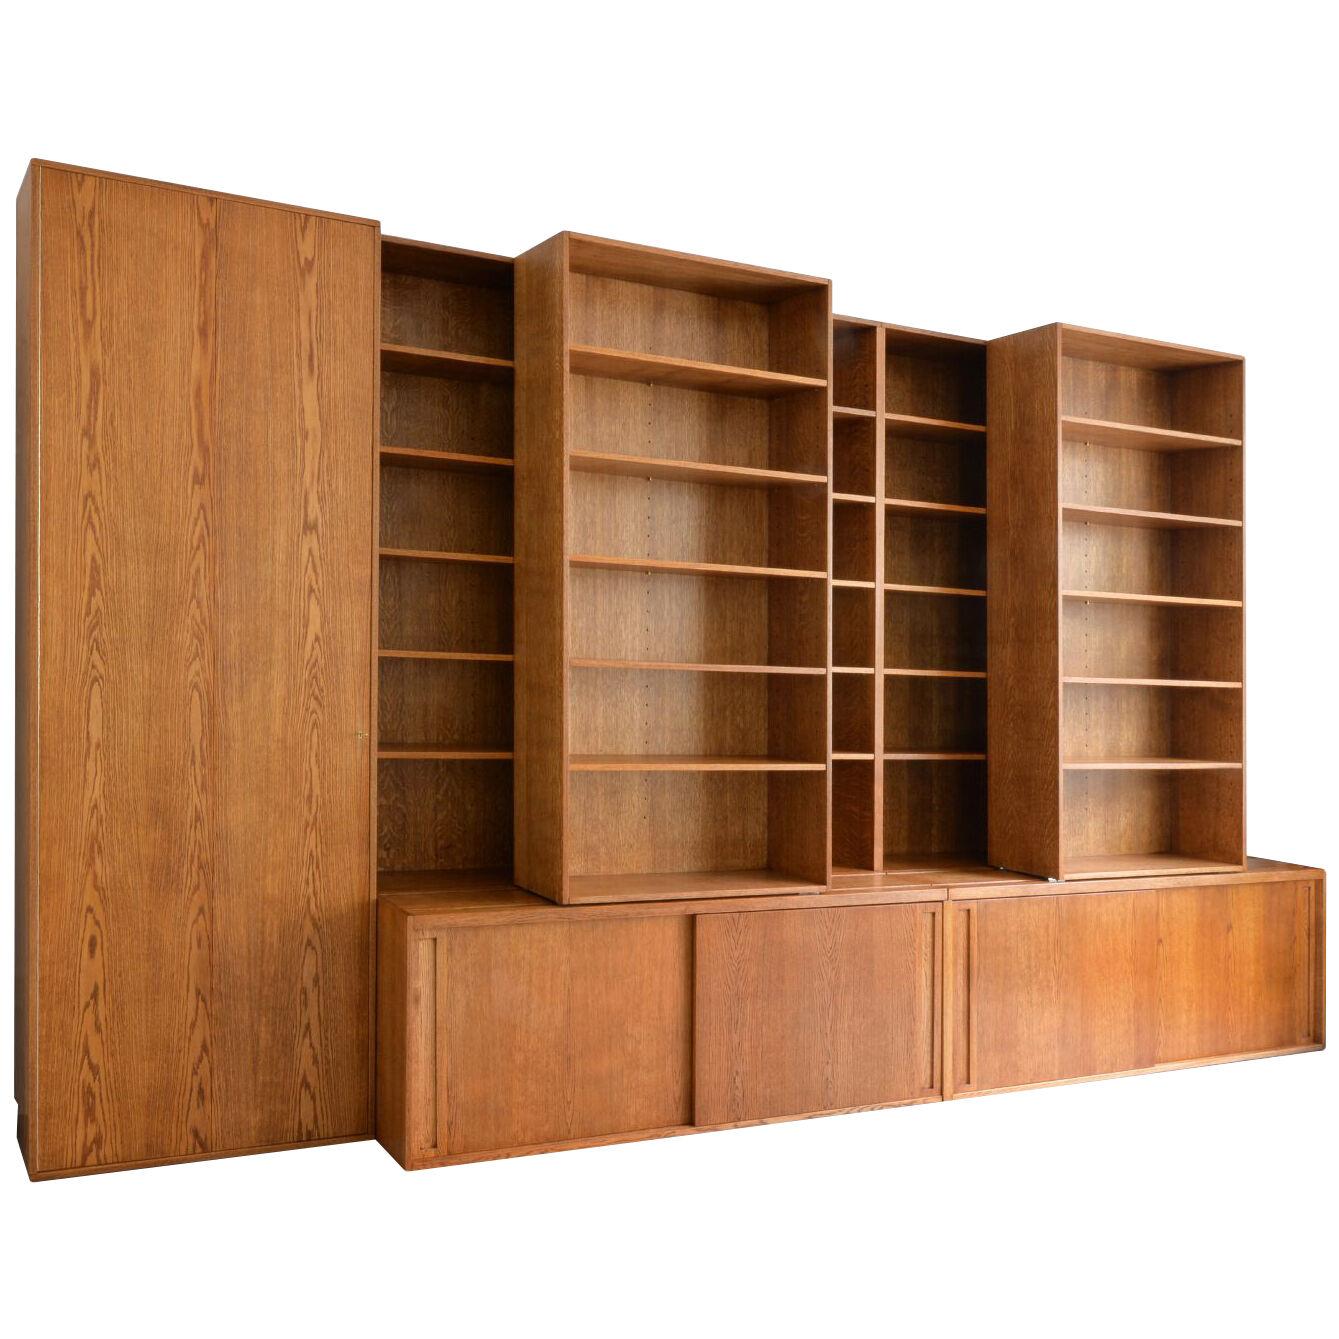 Modern contemporary wooden bookshelf with sliding shelves, customizable